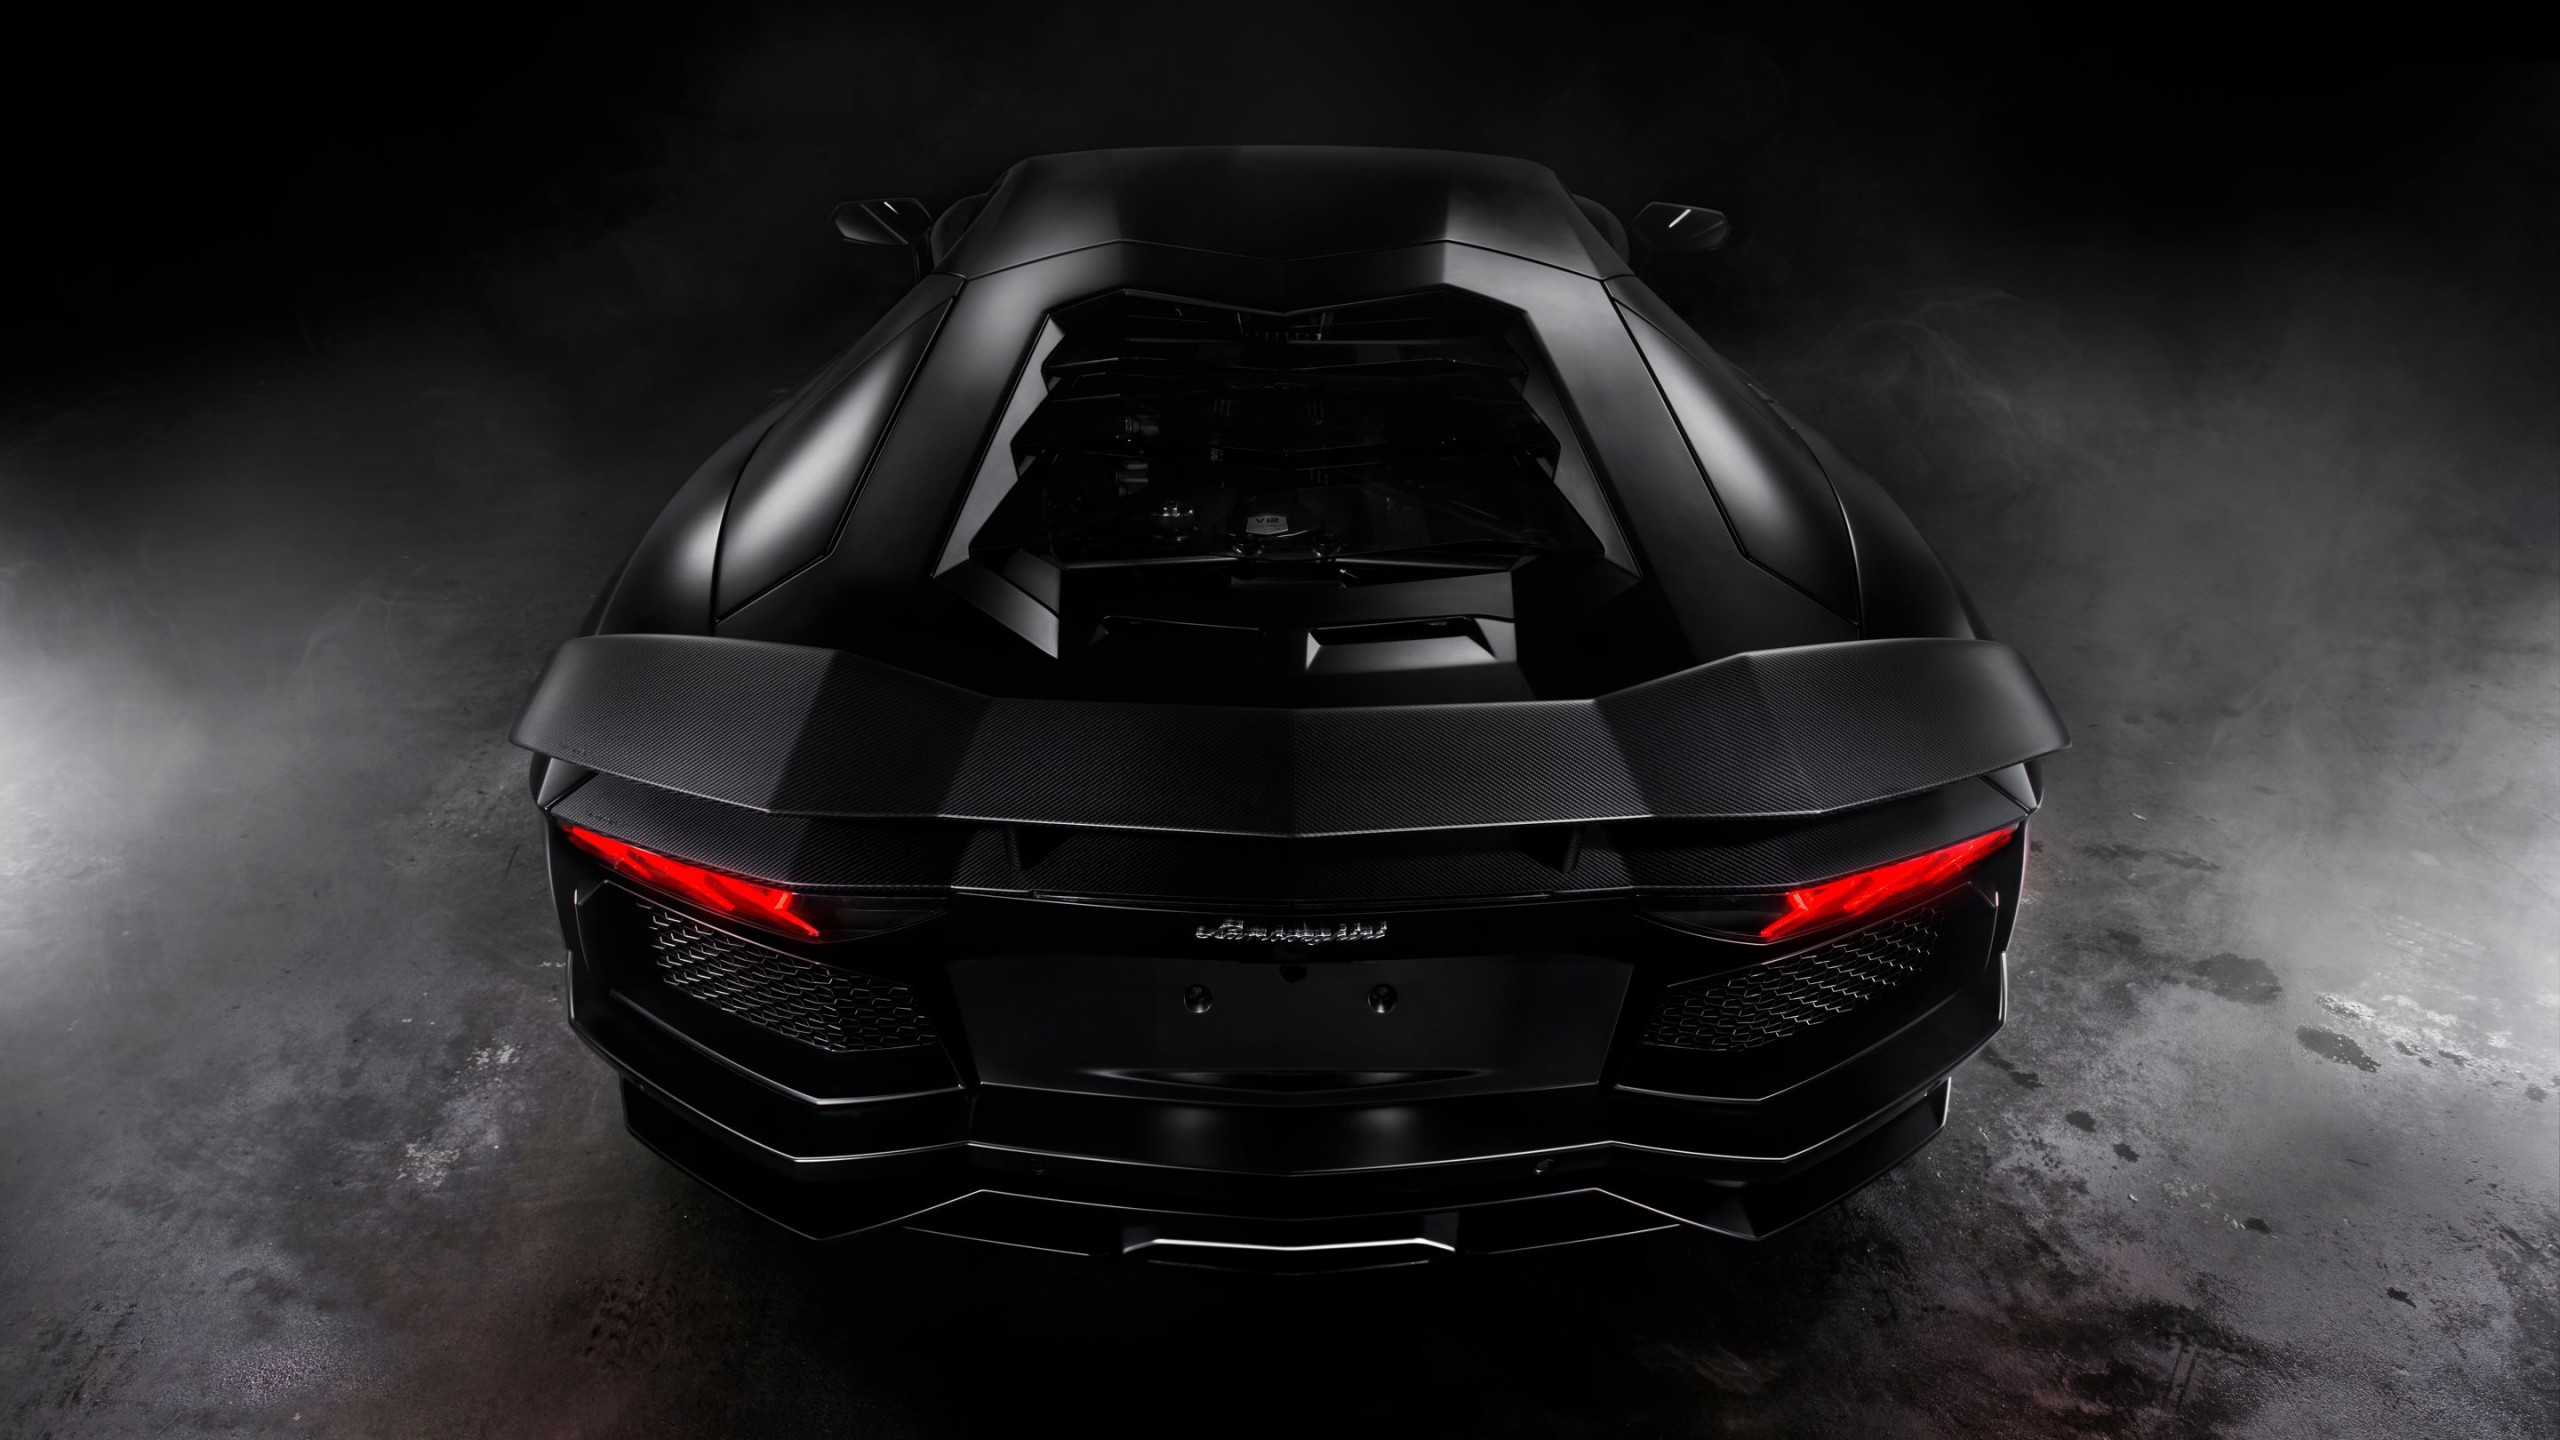 Lamborghini Aventador Matte Black Wallpaper for Desktop 2560x1440